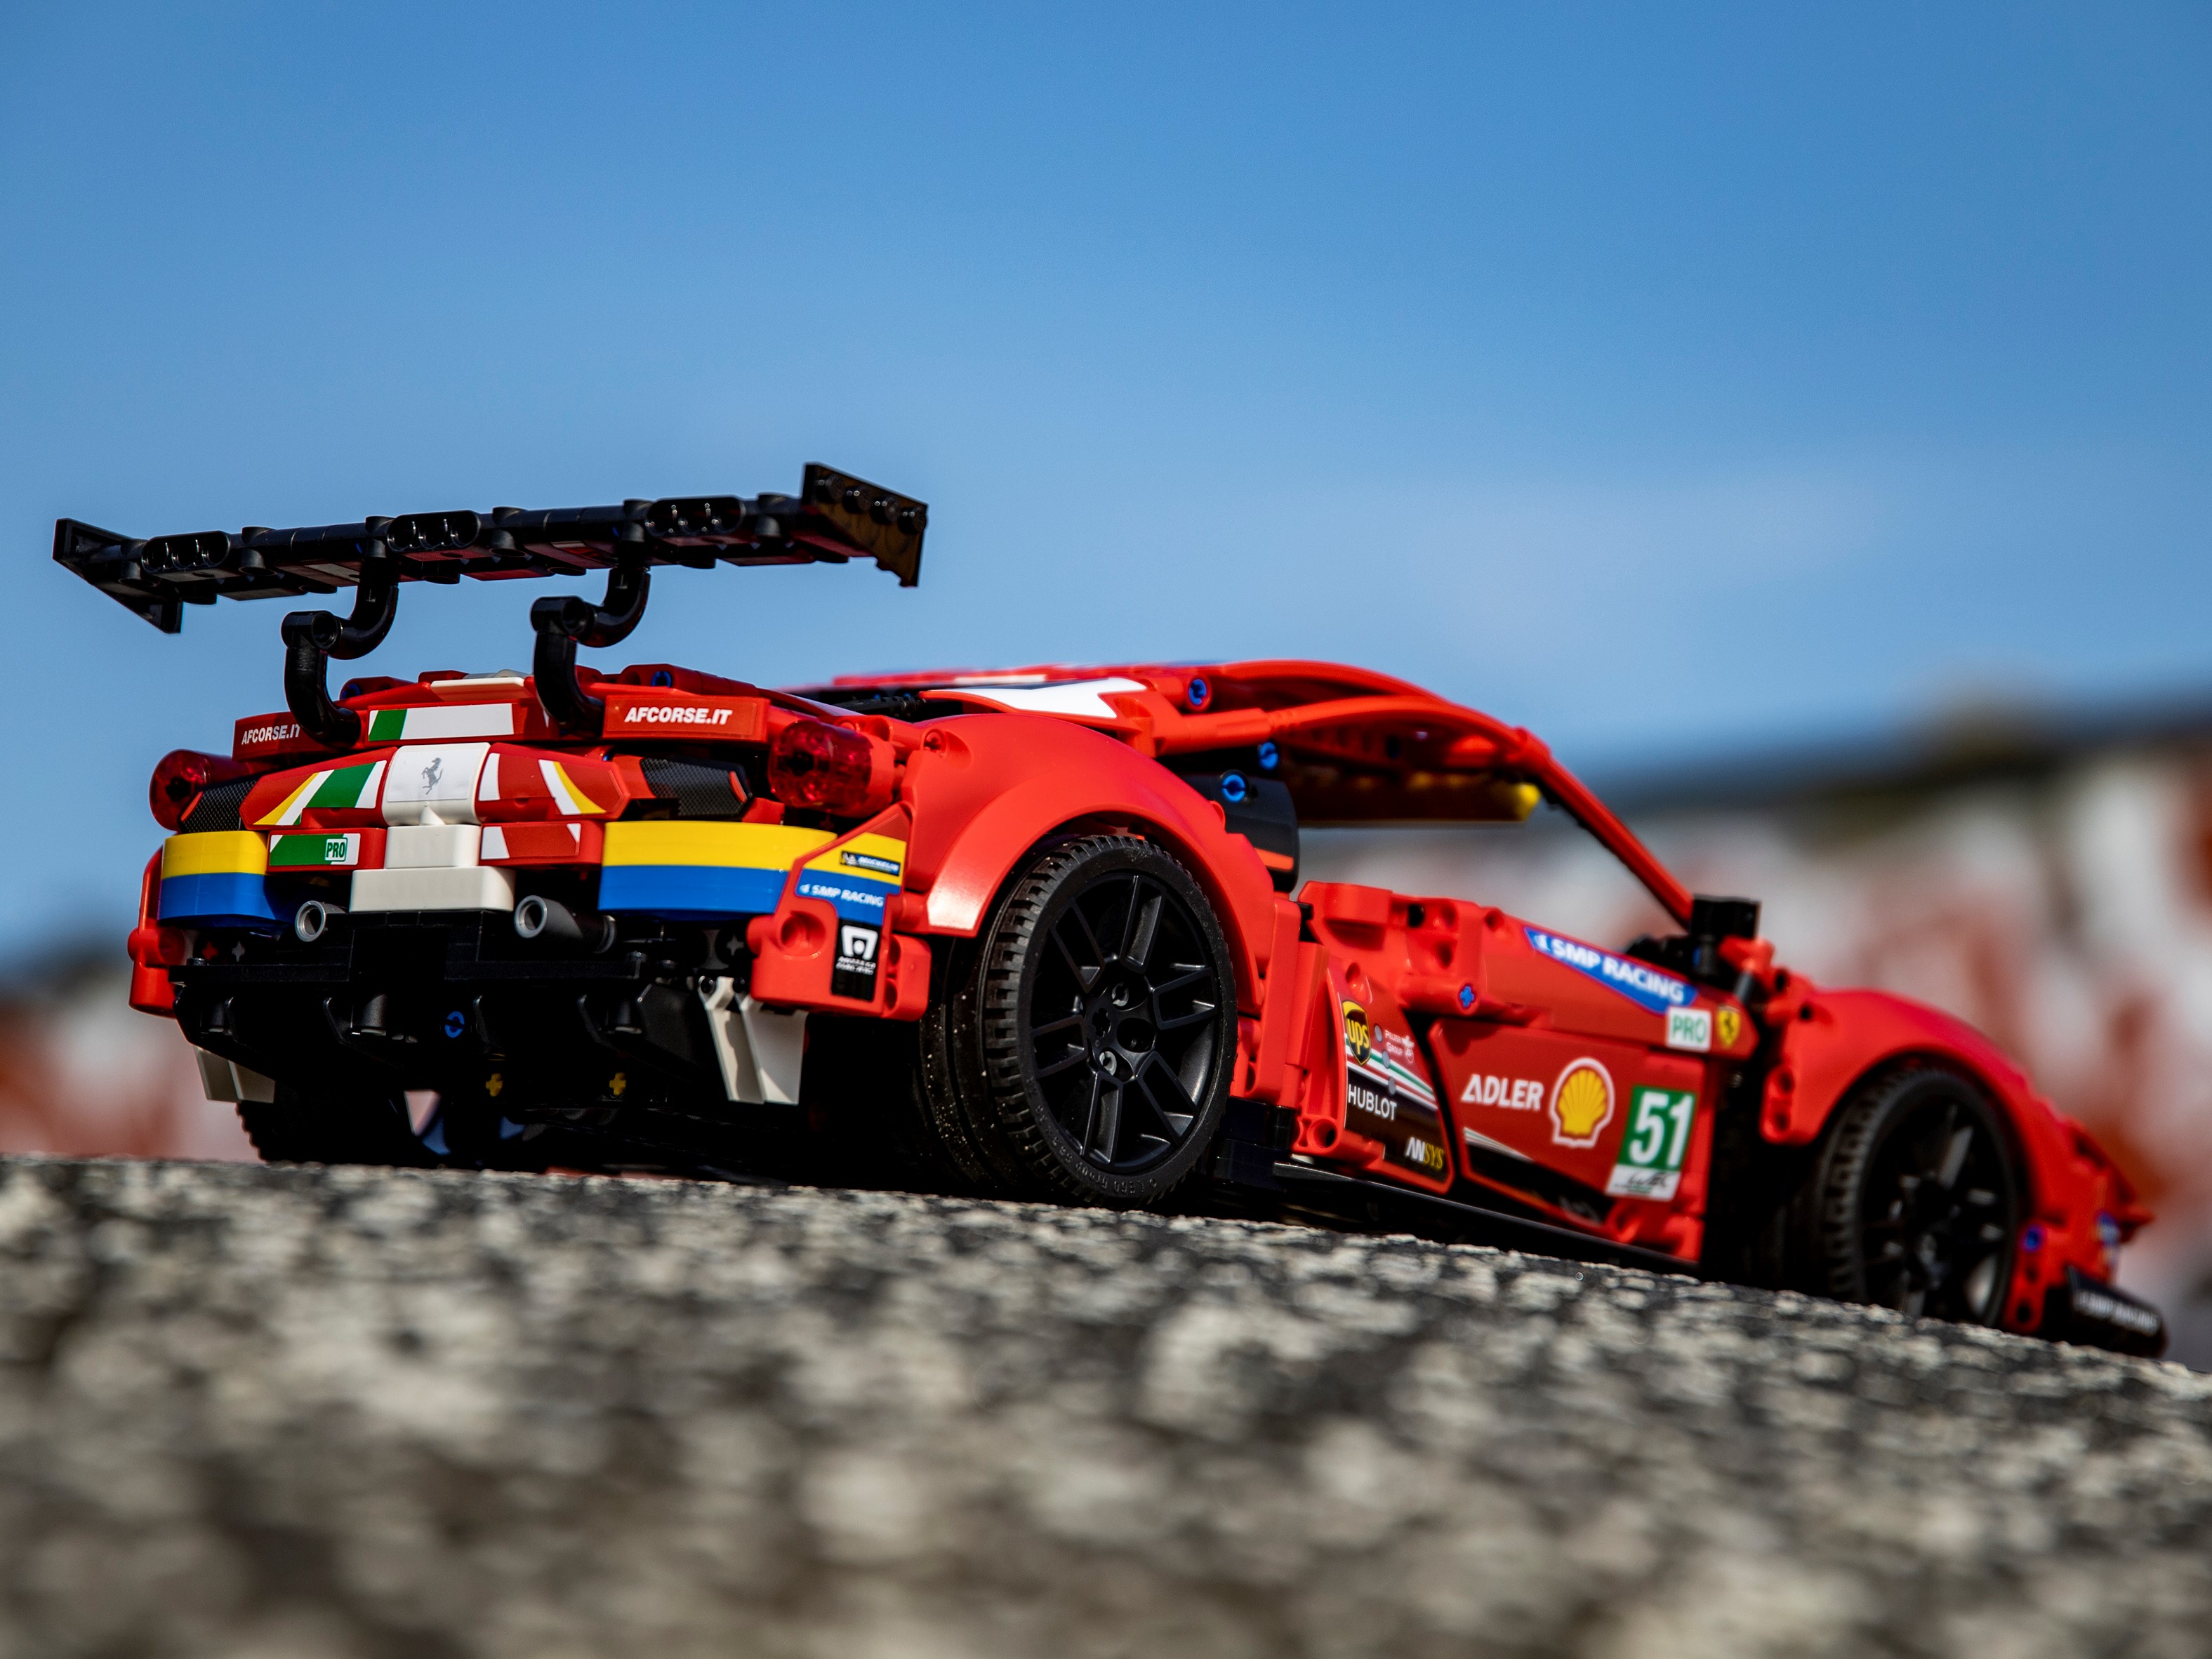 Lego Technic Ferrari 488 Gte af Corse #51 Car Set 42125 : Target